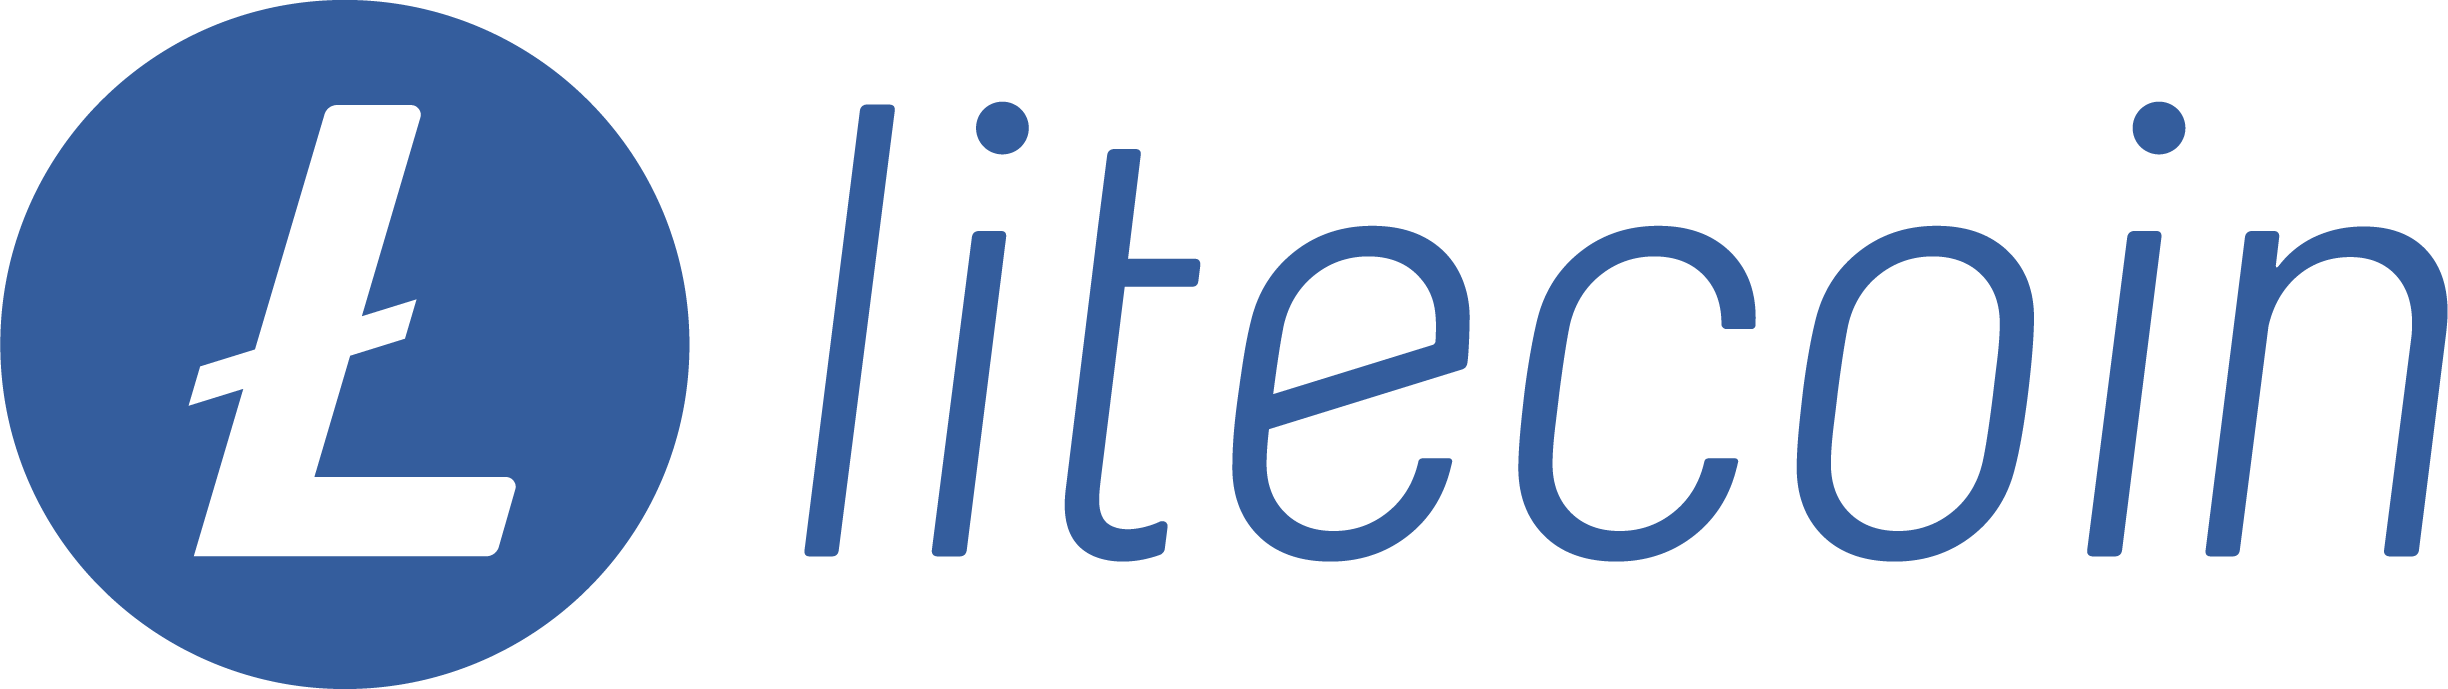 Litecoin Logo - Full Logo S 2.png